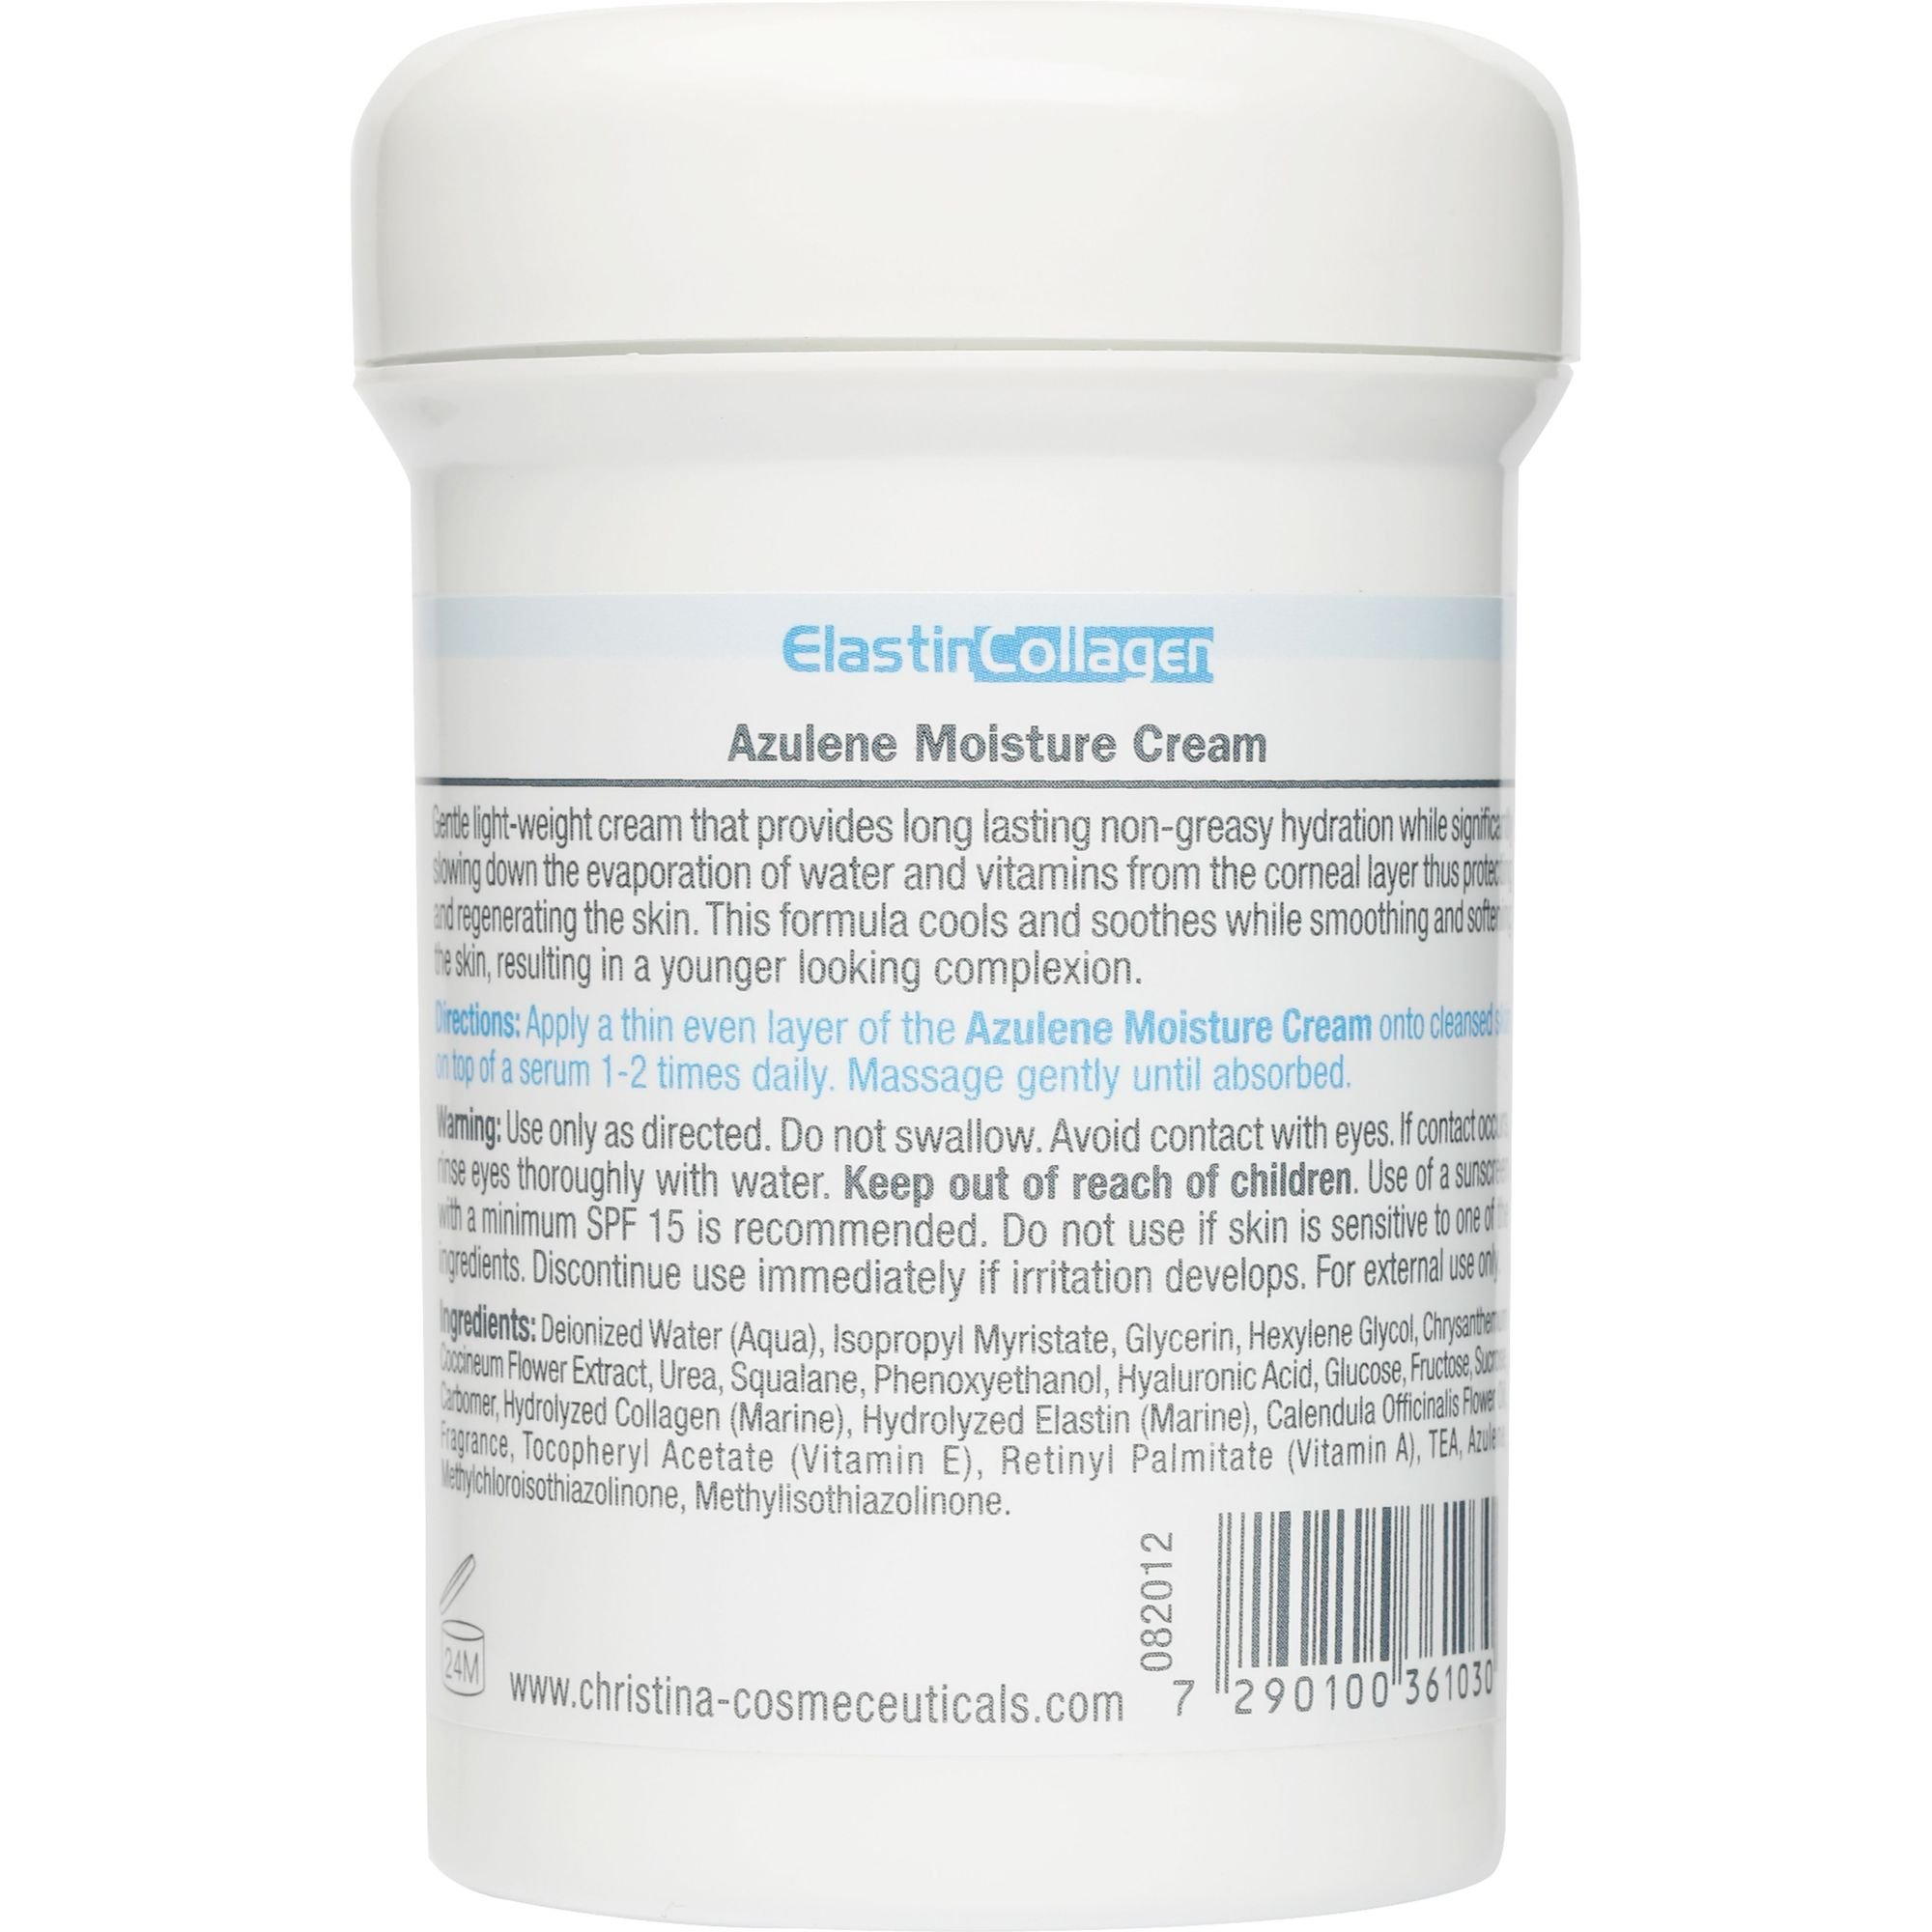 Увлажняющий крем для нормальной кожи Christina Elastin Collagen Azulene Moisture Cream with Vitamins A, E & HA 250 мл - фото 2